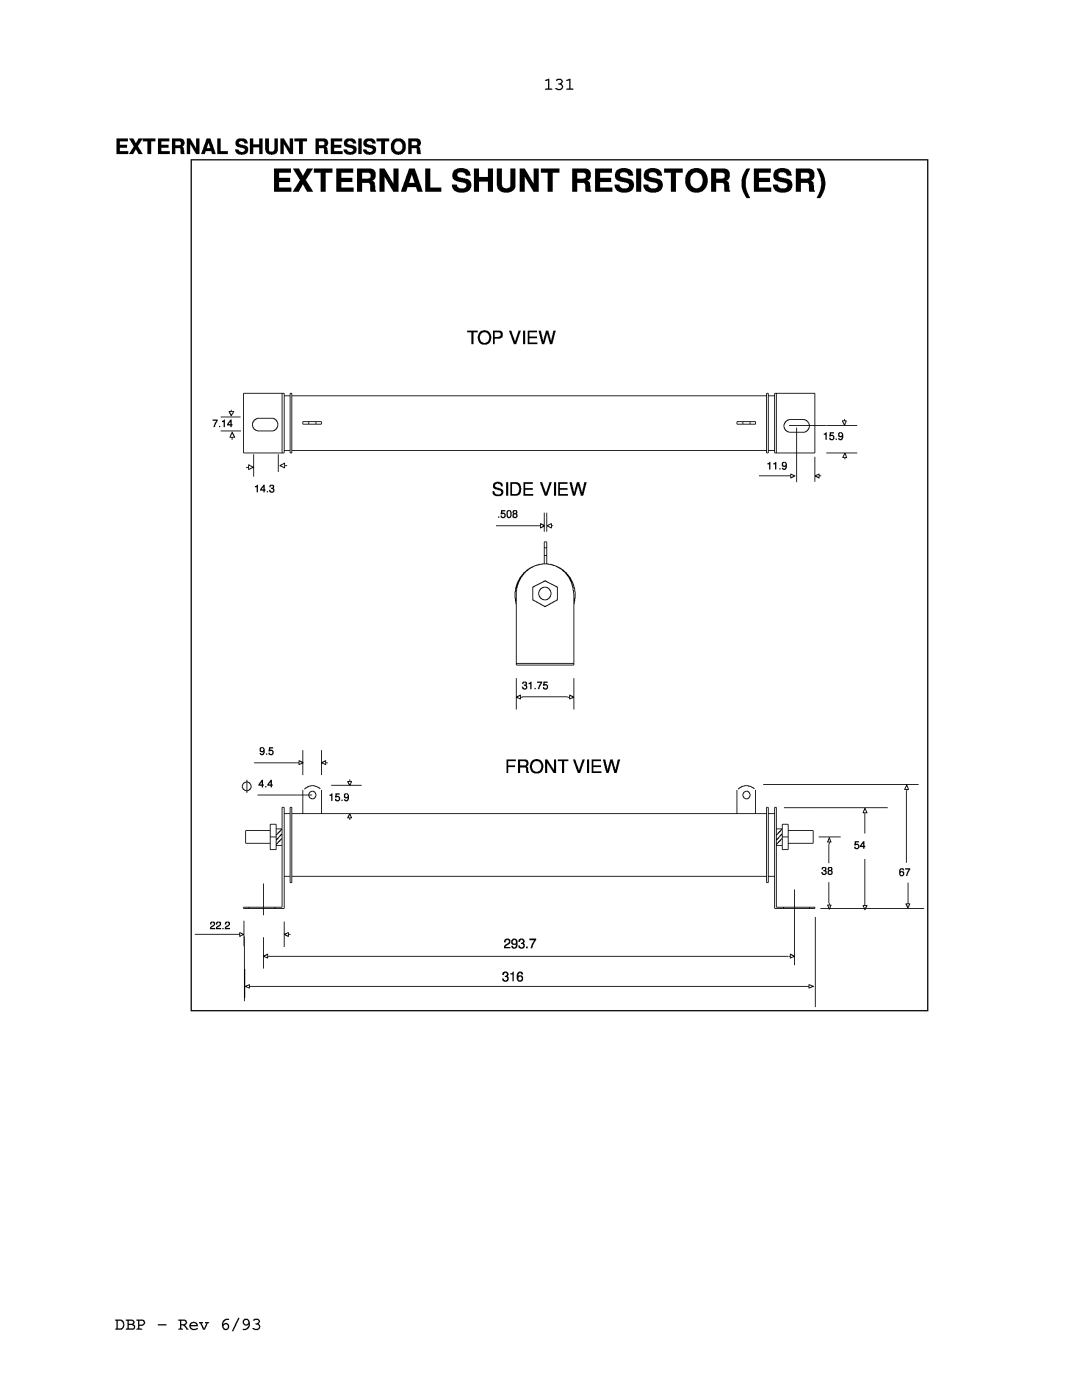 Elmo DBP SERIES manual External Shunt Resistor Esr, 293.7 